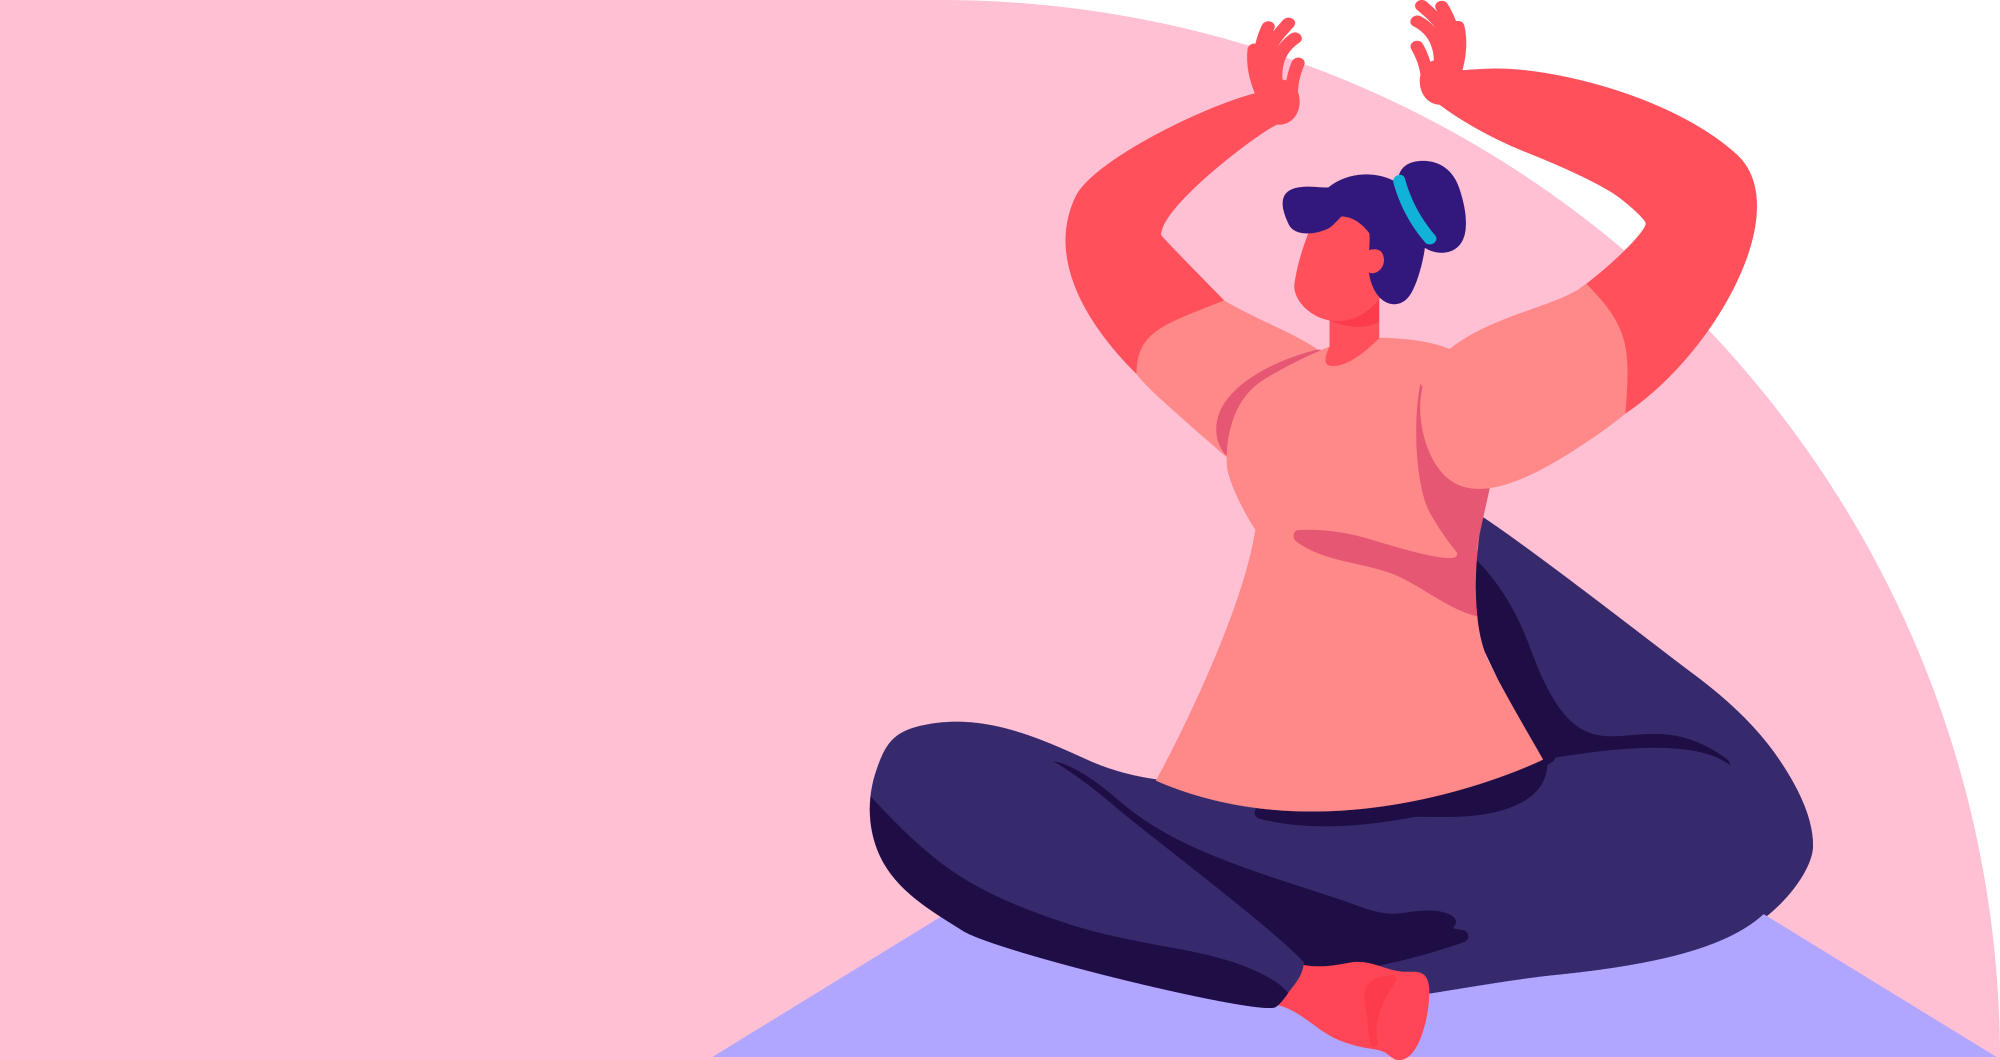 Period Yoga